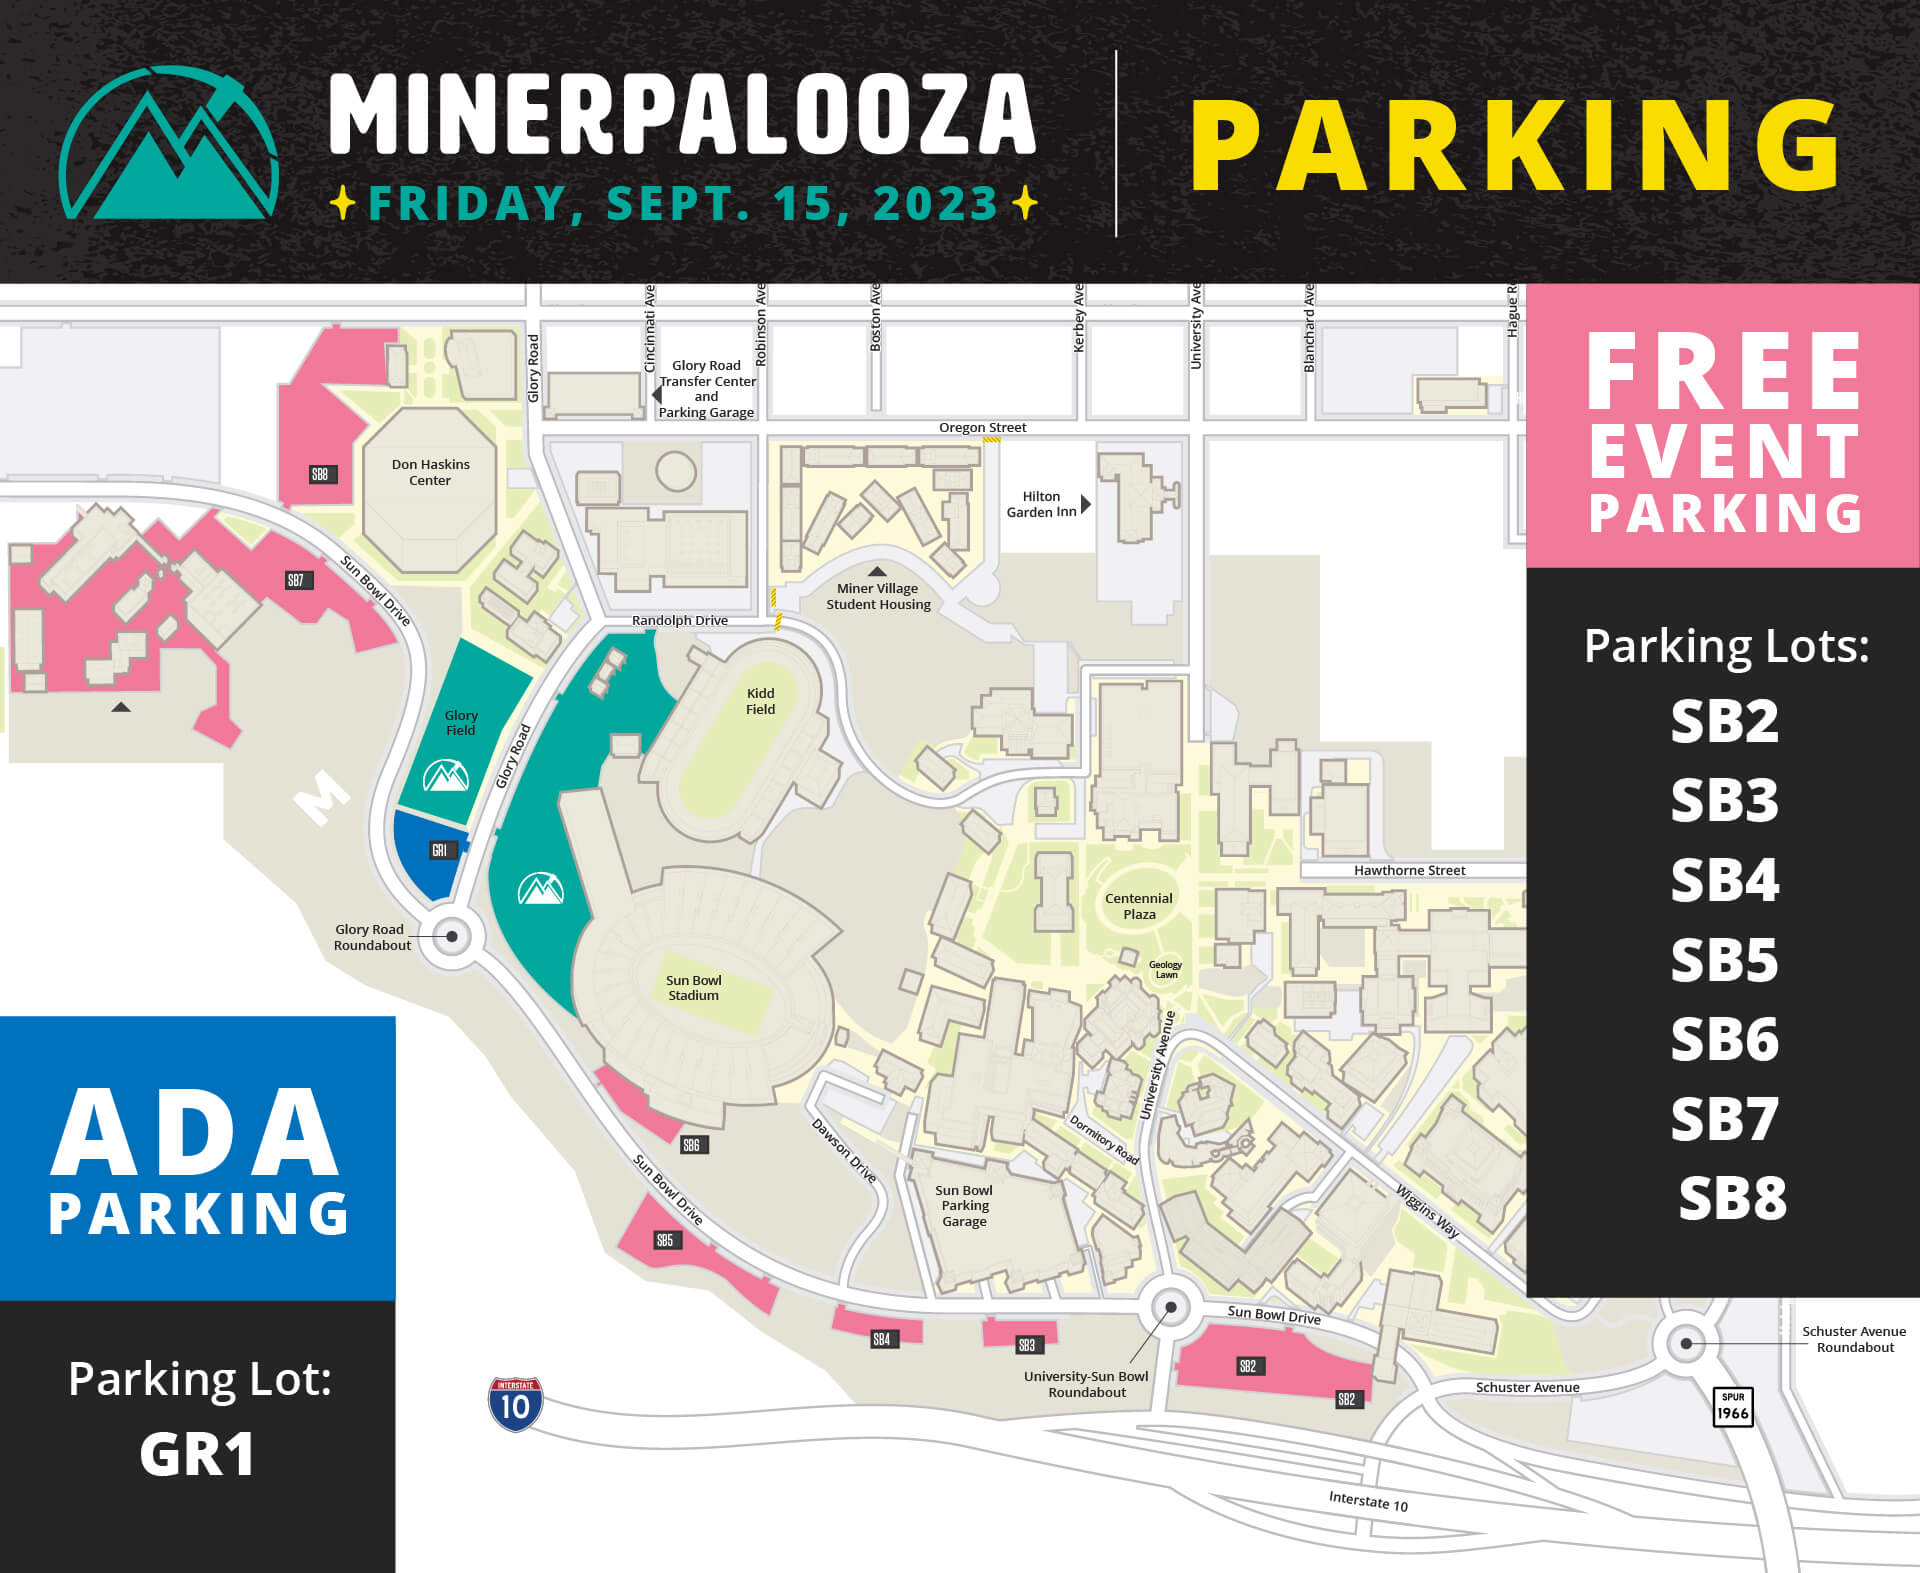 Minerpalooza parking event